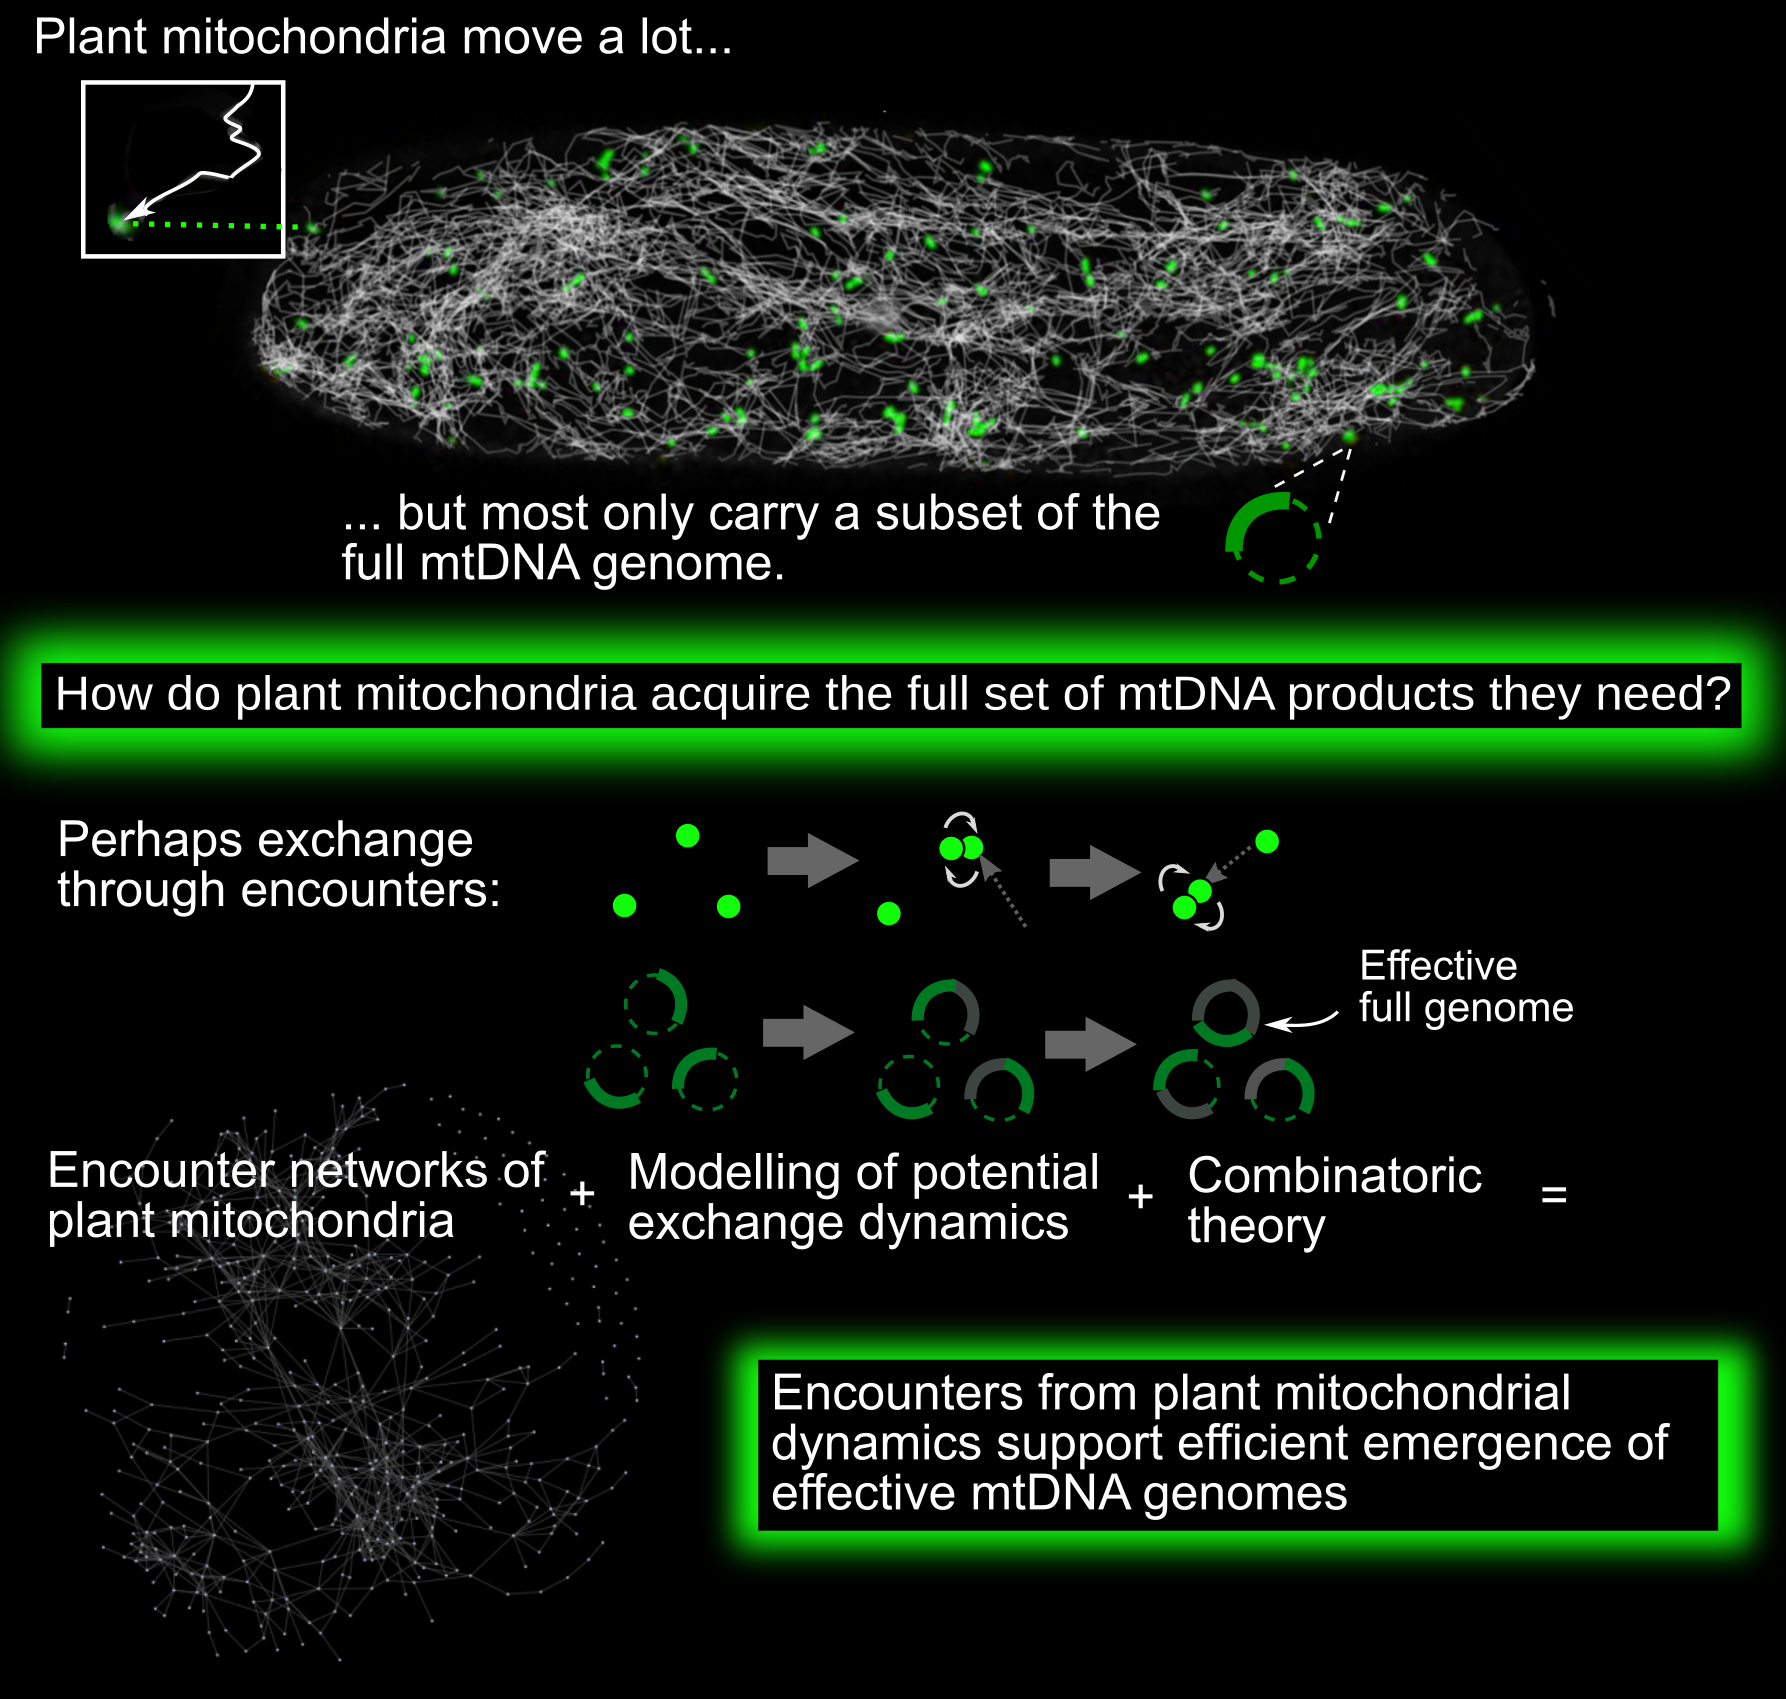 Exchange on dynamic encounter networks allows plant mitochondria